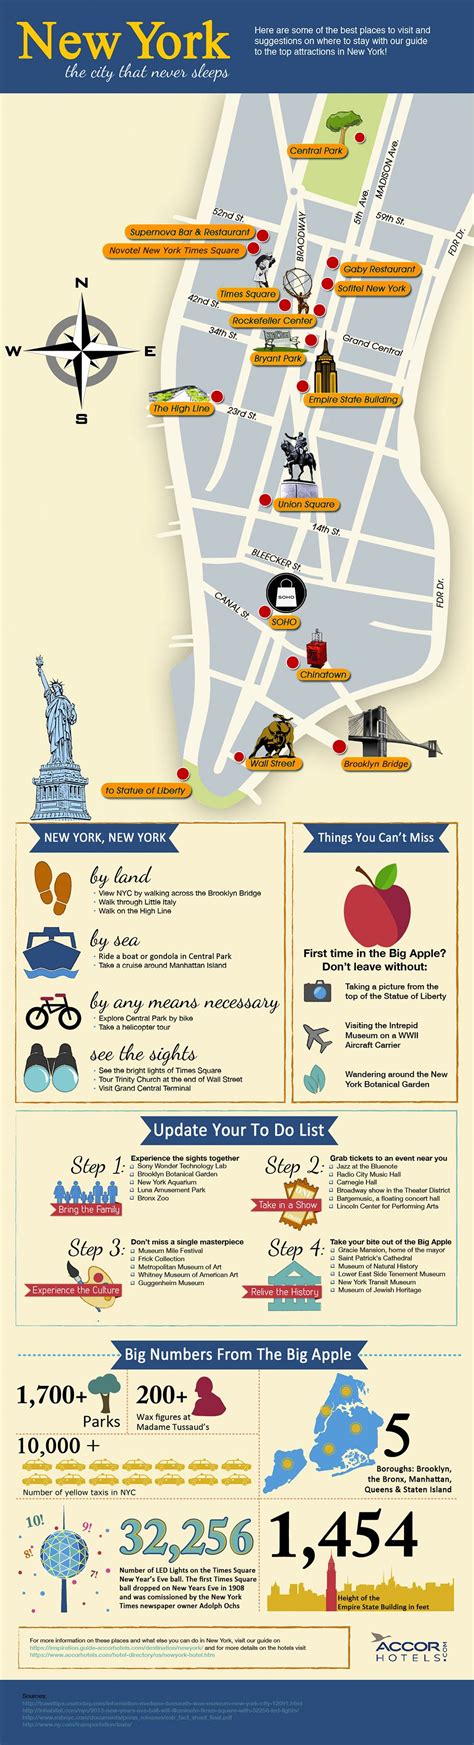 New York City Infographics By Accorhotels New York City Pinterest